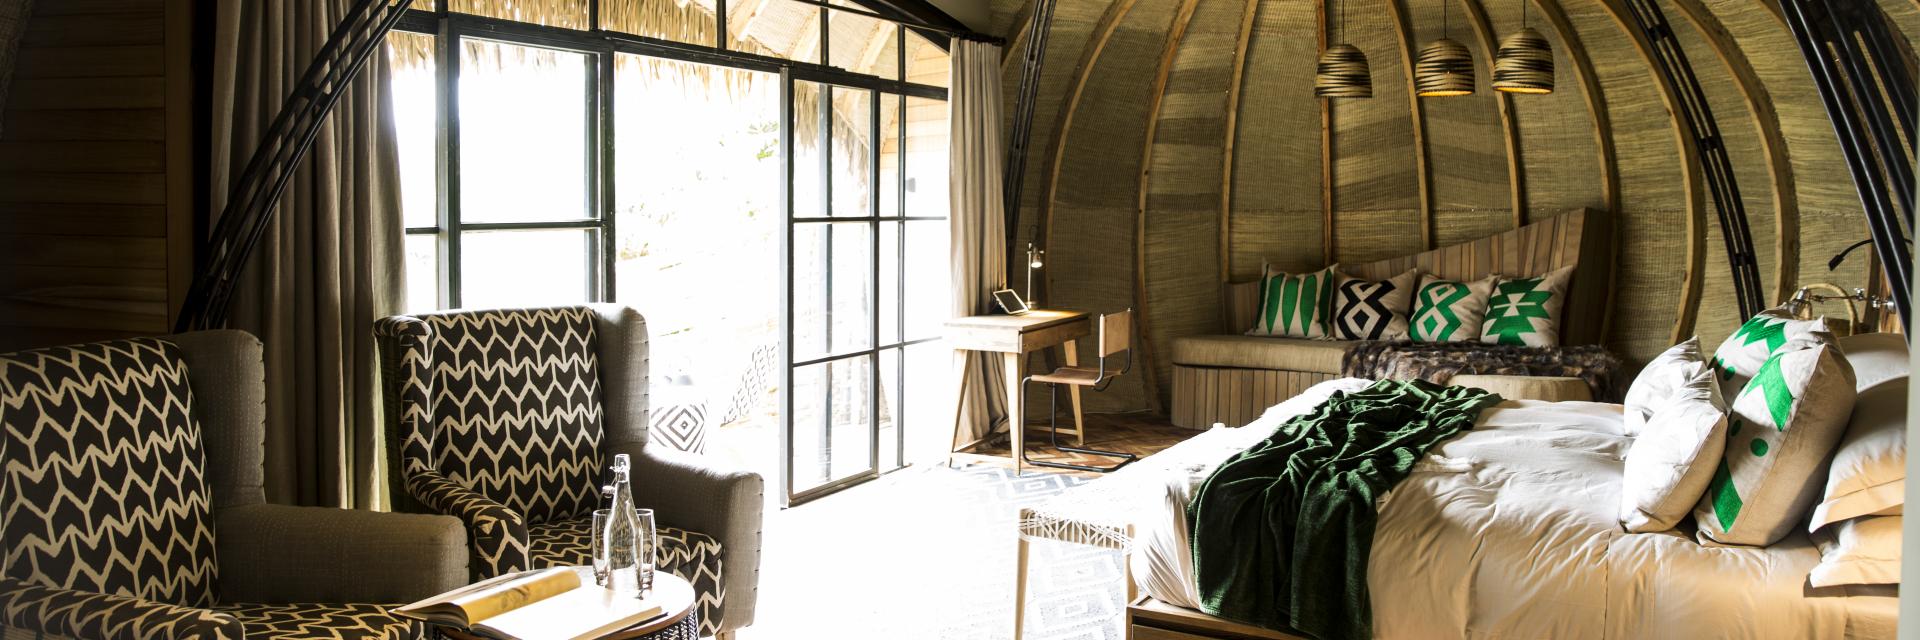 Wilderness Safaris Bisate Lodge Room Accommodations